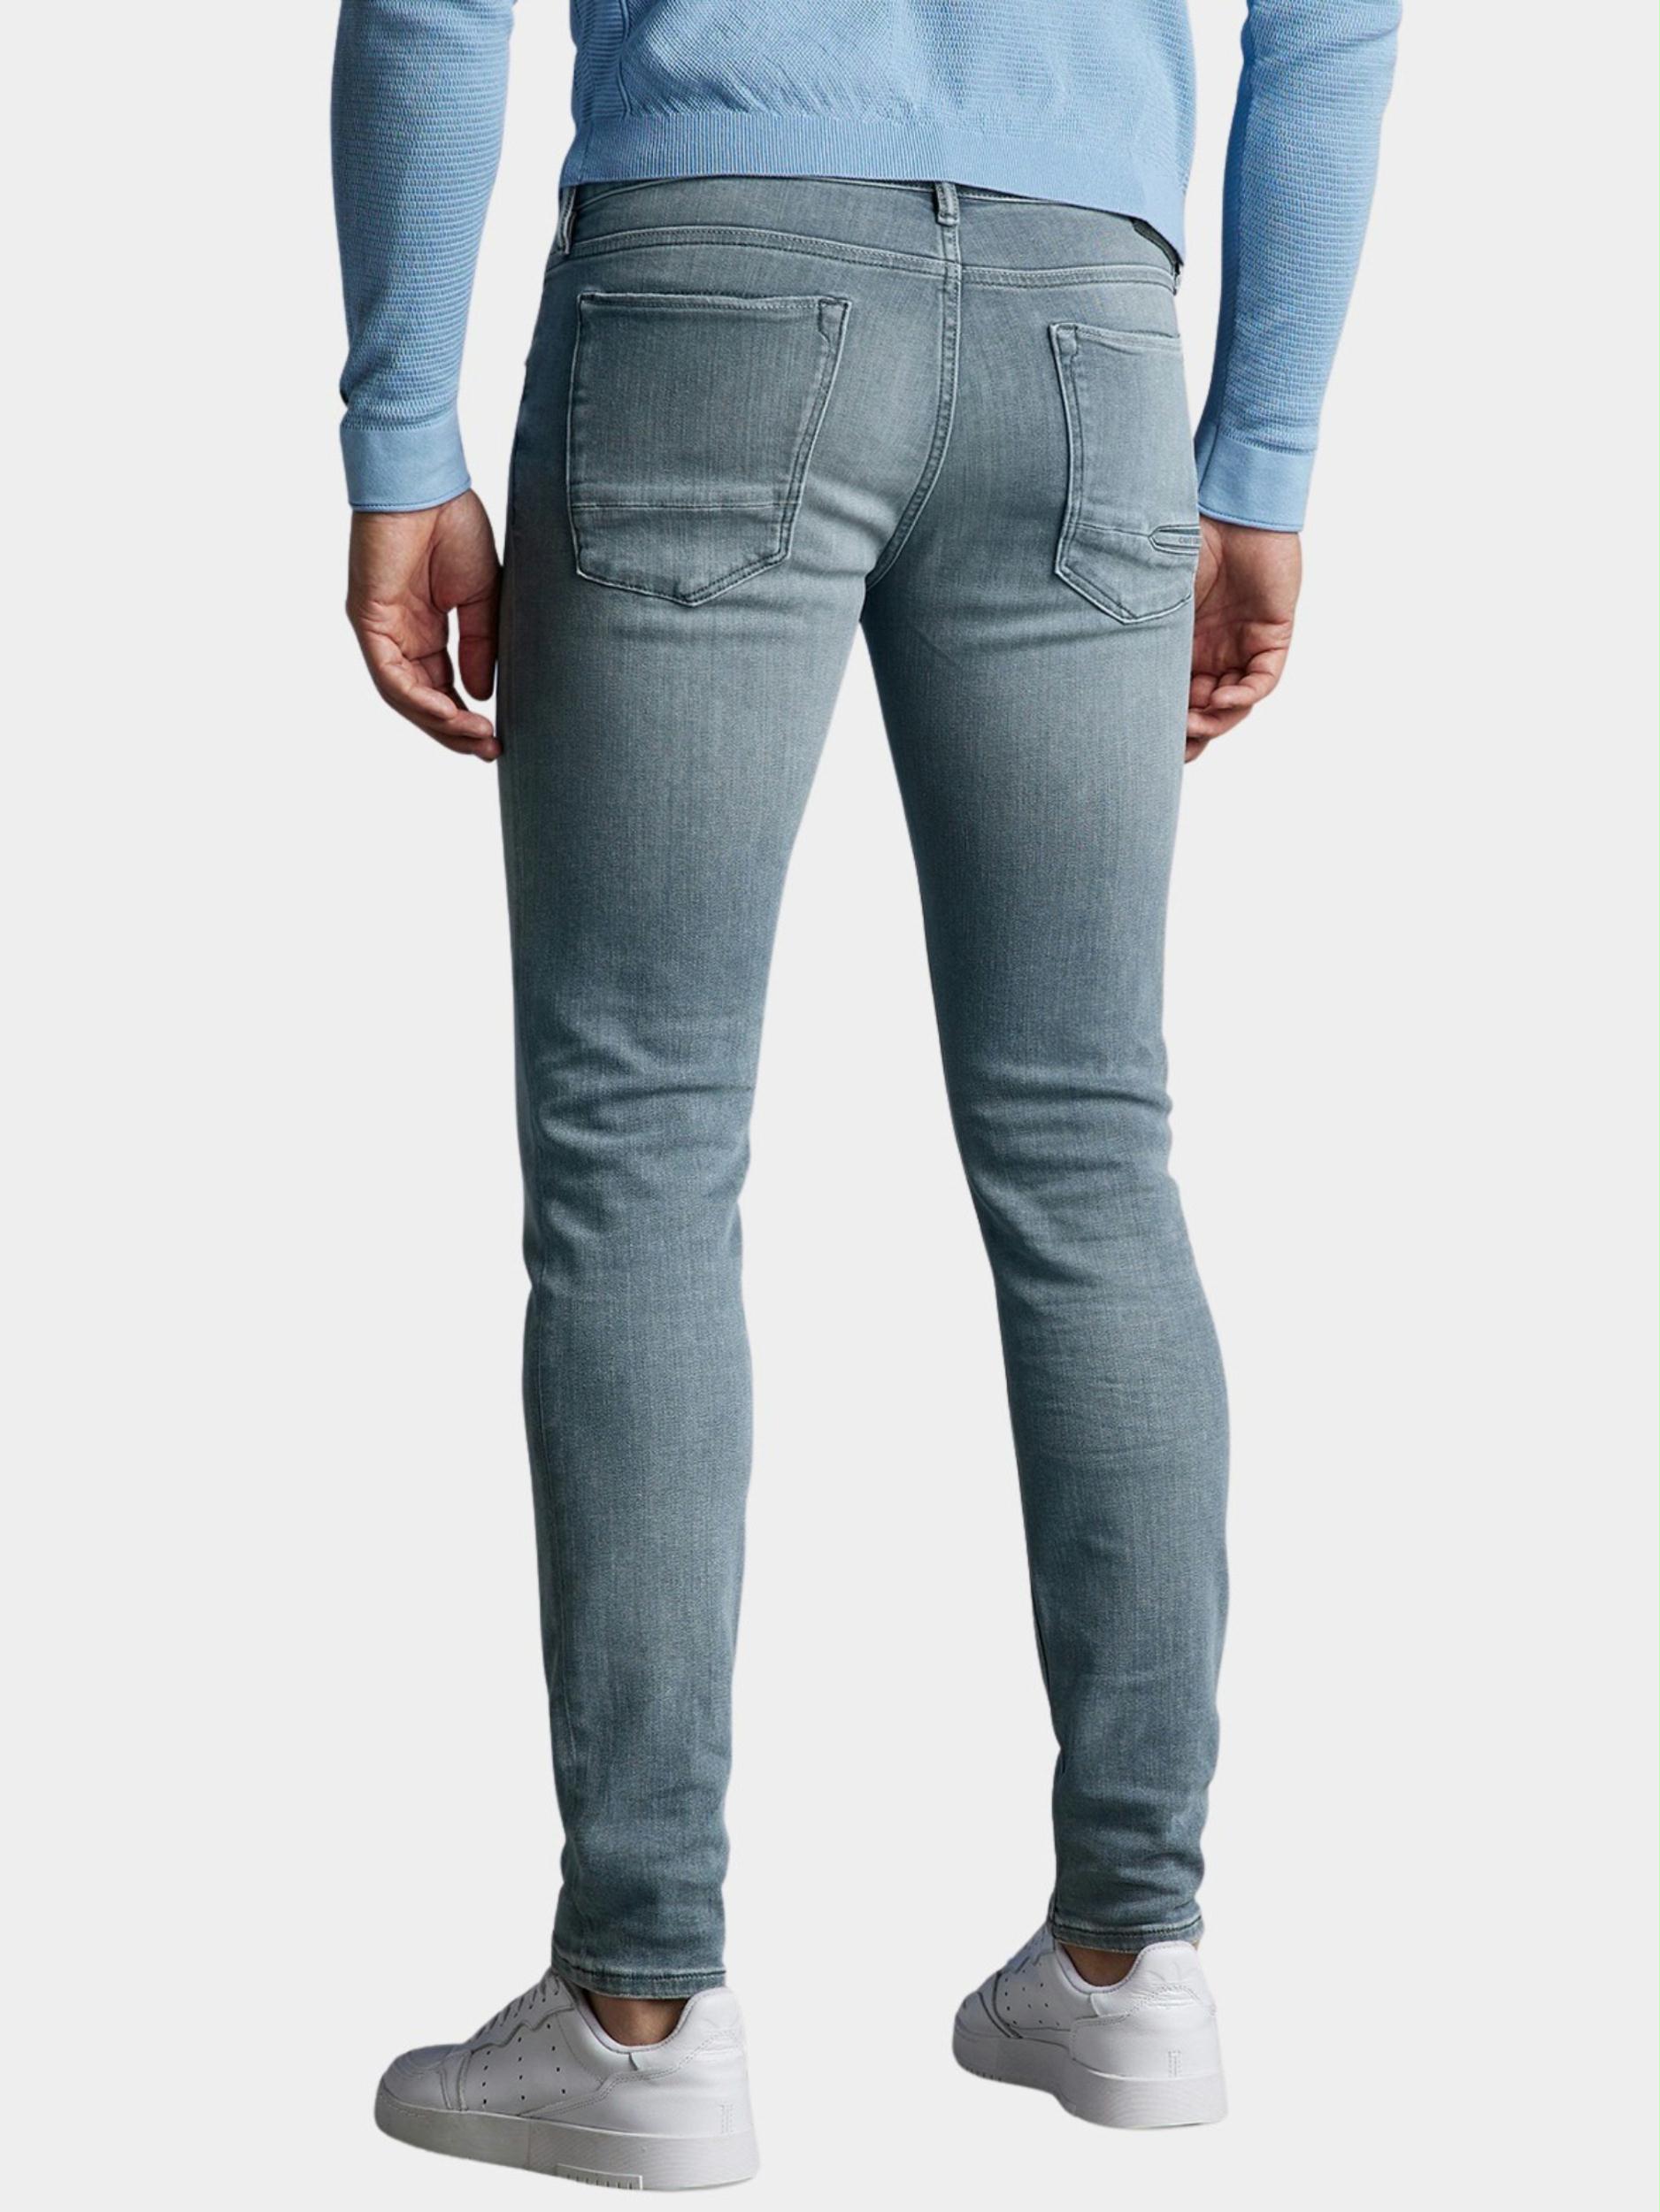 duizelig Bepalen Identiteit Cast Iron 5-Pocket Jeans Grijs RISER SLIM BLUE GREY SKY CTR2302710/BGS |  Bos Men Shop